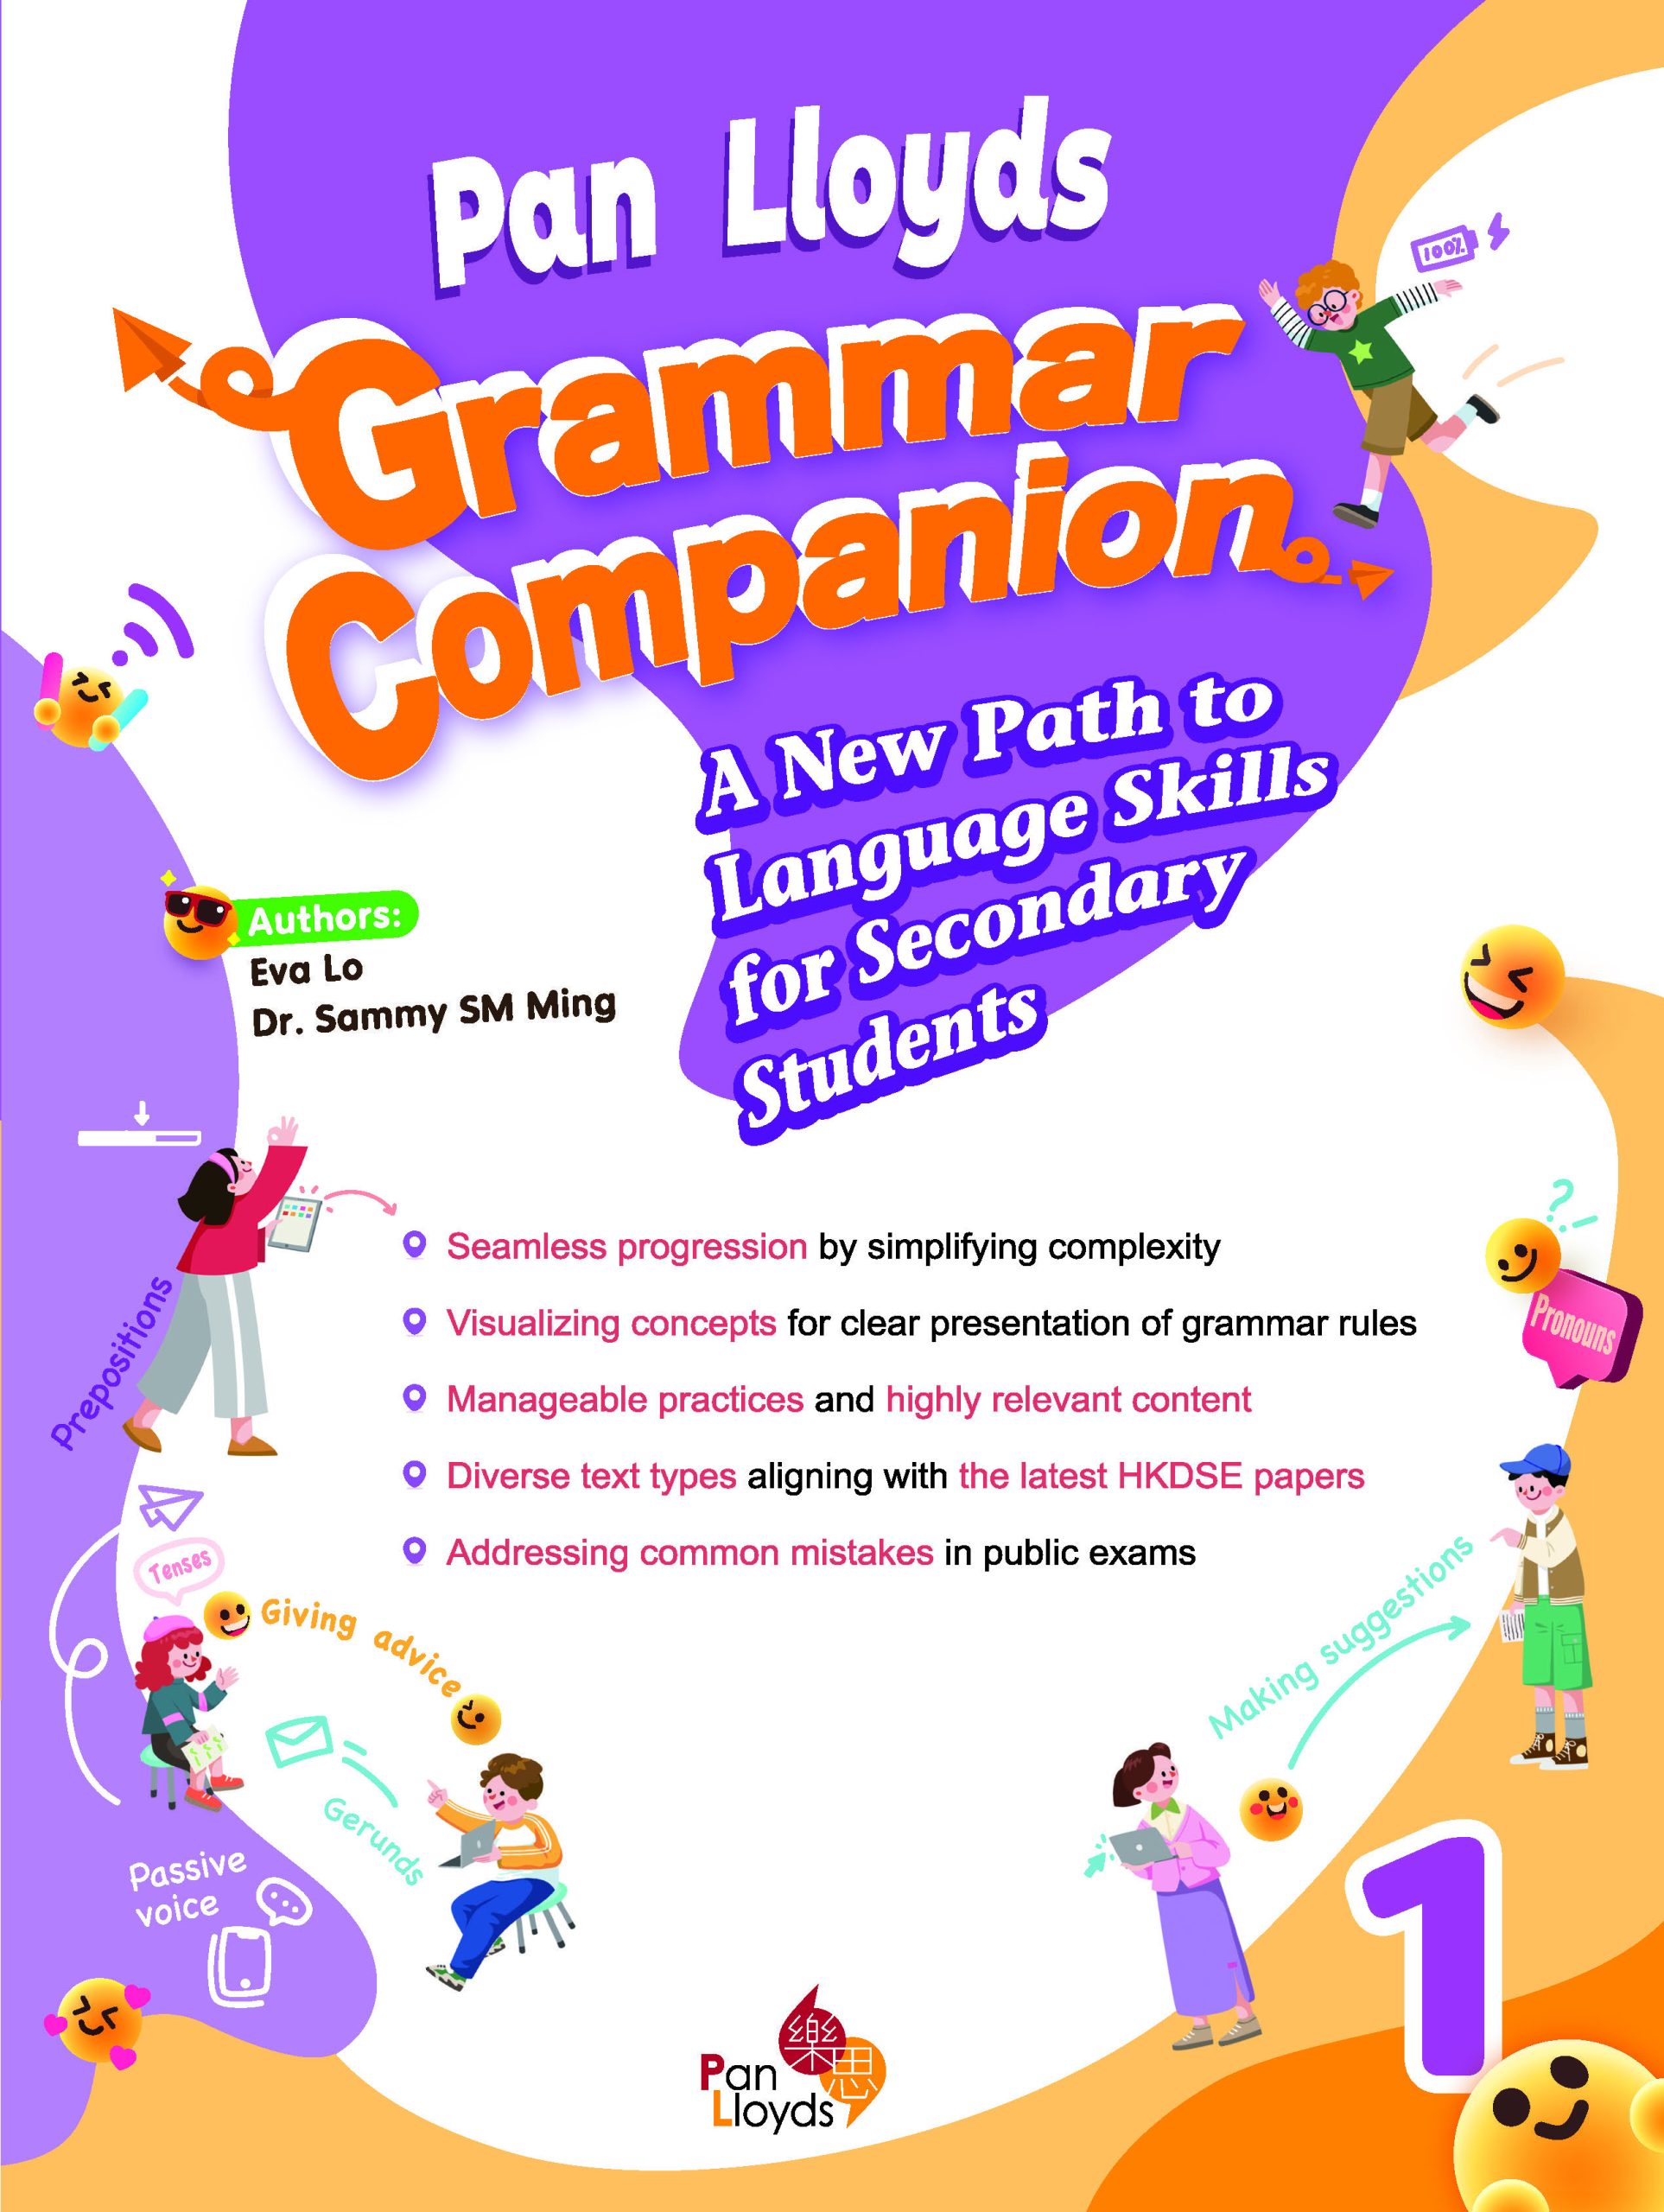 Pan Lloyds Grammar Companion for Secondary Students